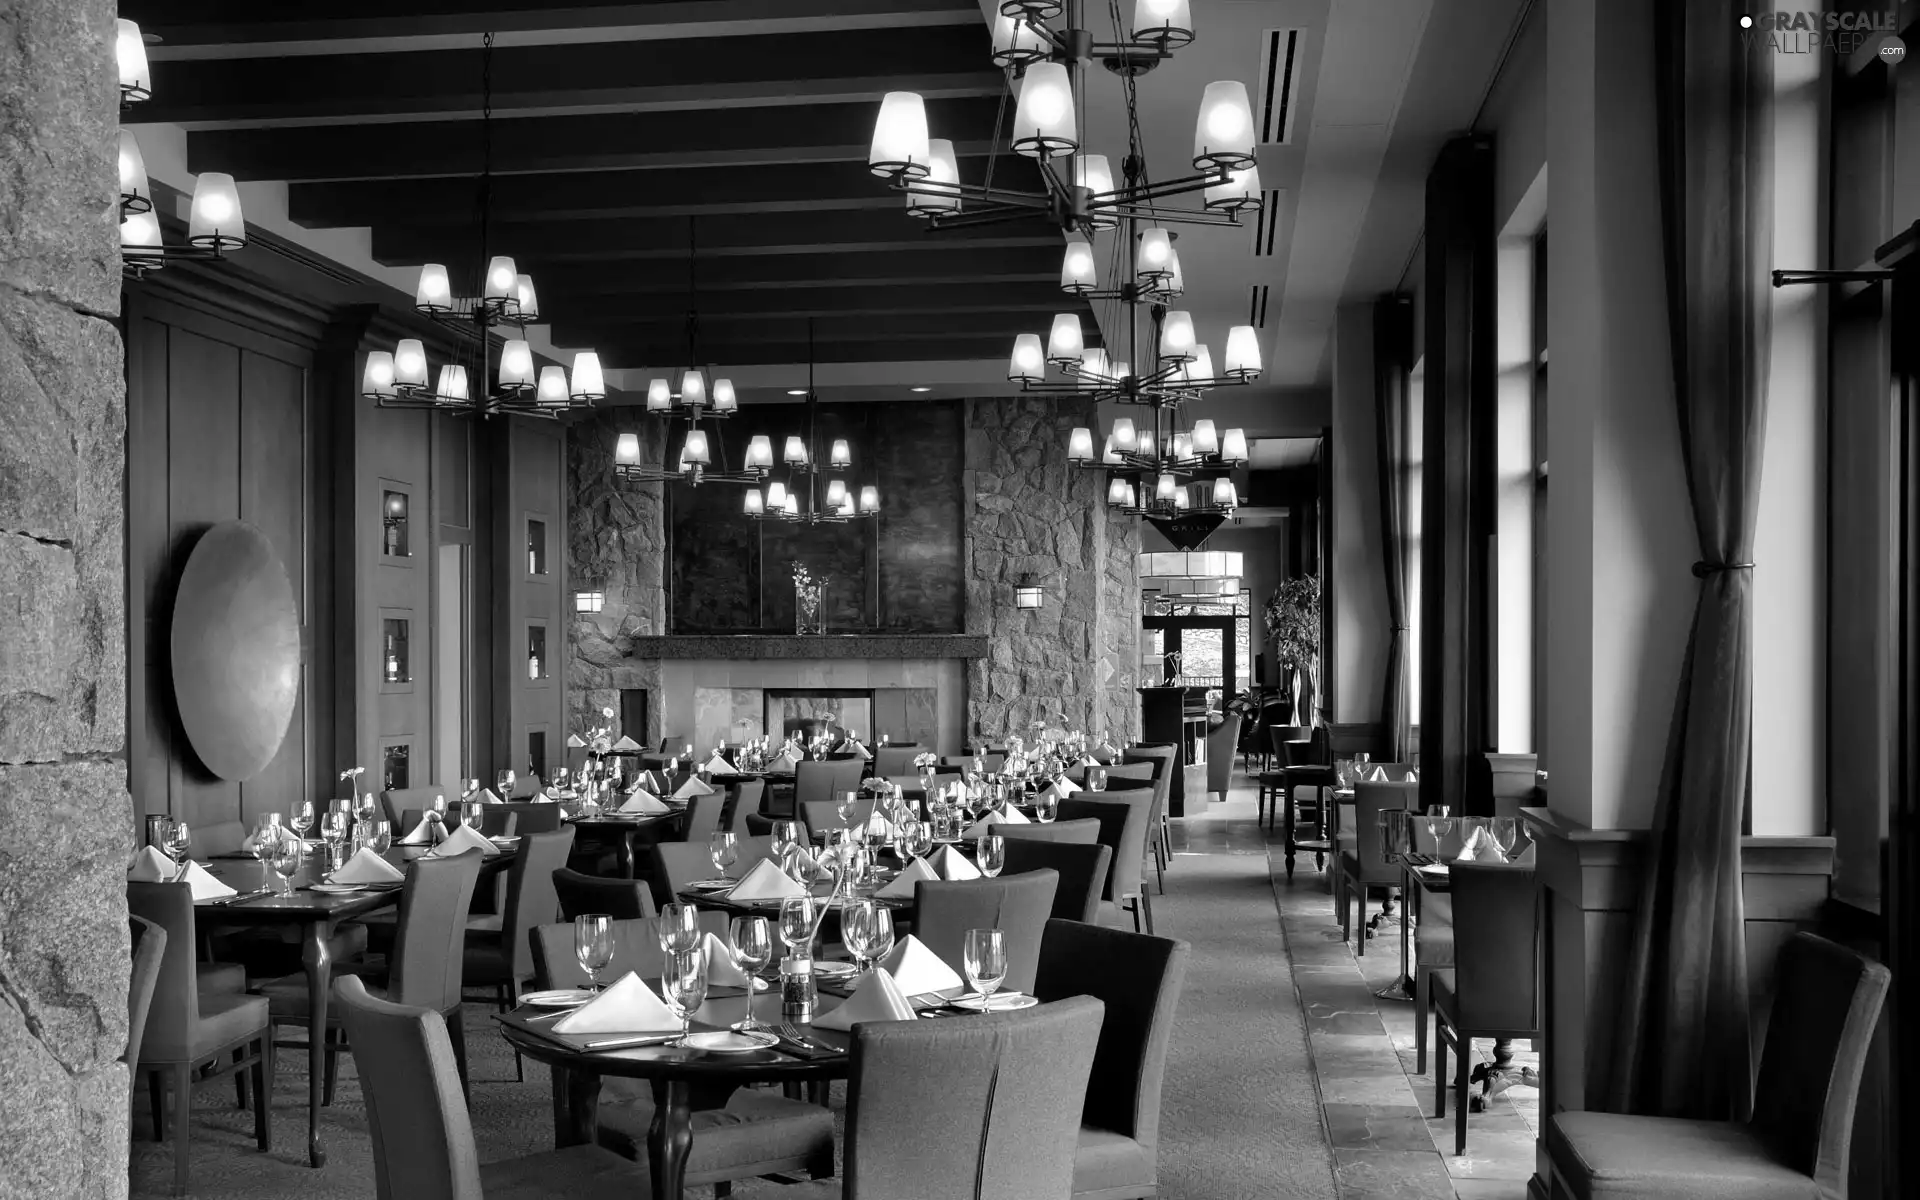 Tables, Hotel hall, Restaurant